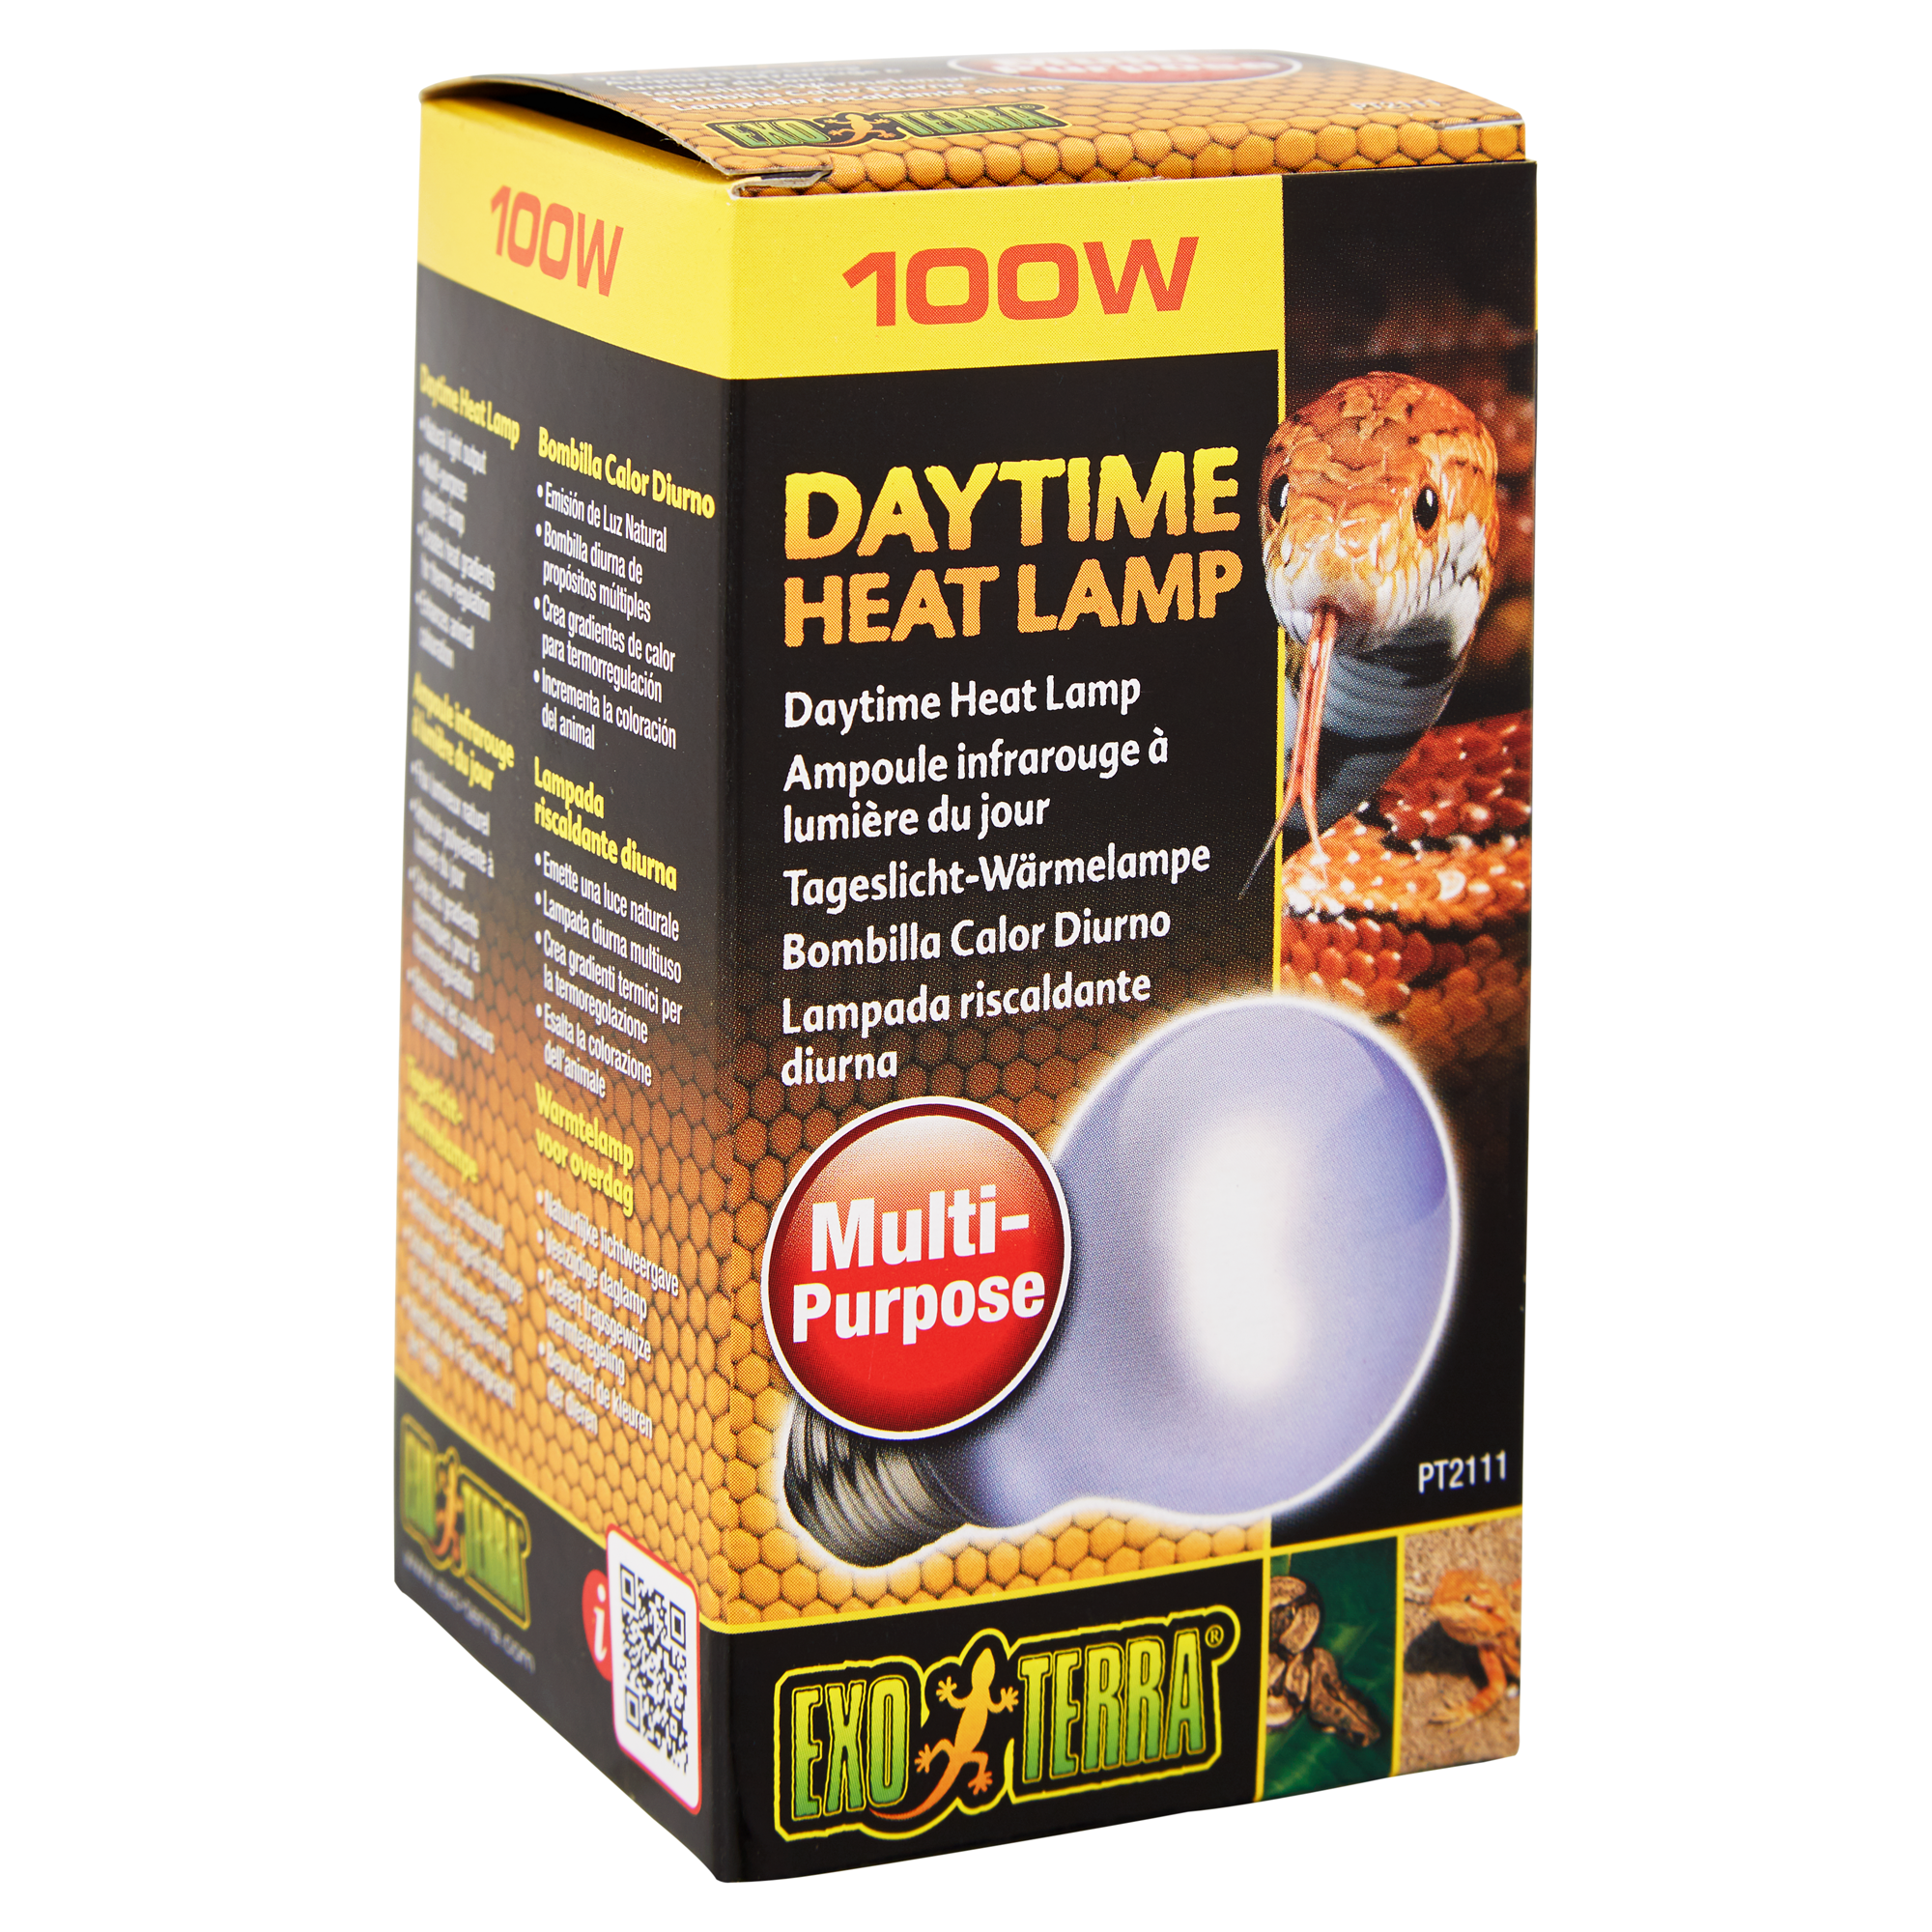 Tageslicht-Wärmelampe 'Daytime Heat Lamp' 100 W + product picture